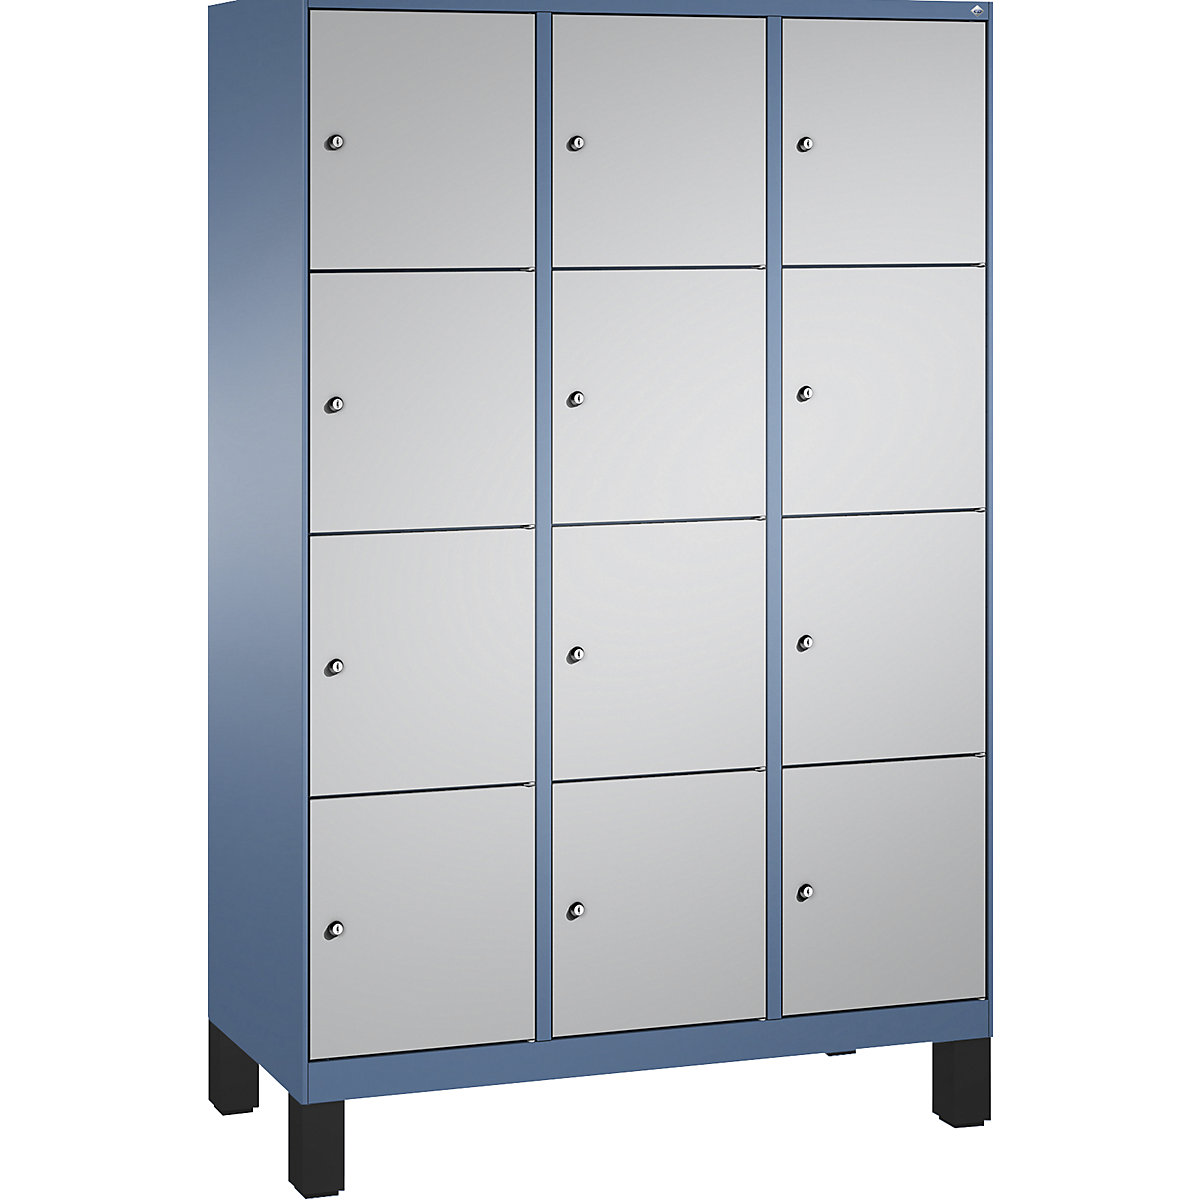 Armário de cacifos EVOLO, com pés – C+P, 3 compartimentos, 4 cacifos cada, largura do compartimento 400 mm, azul distante / cinza alumínio-8